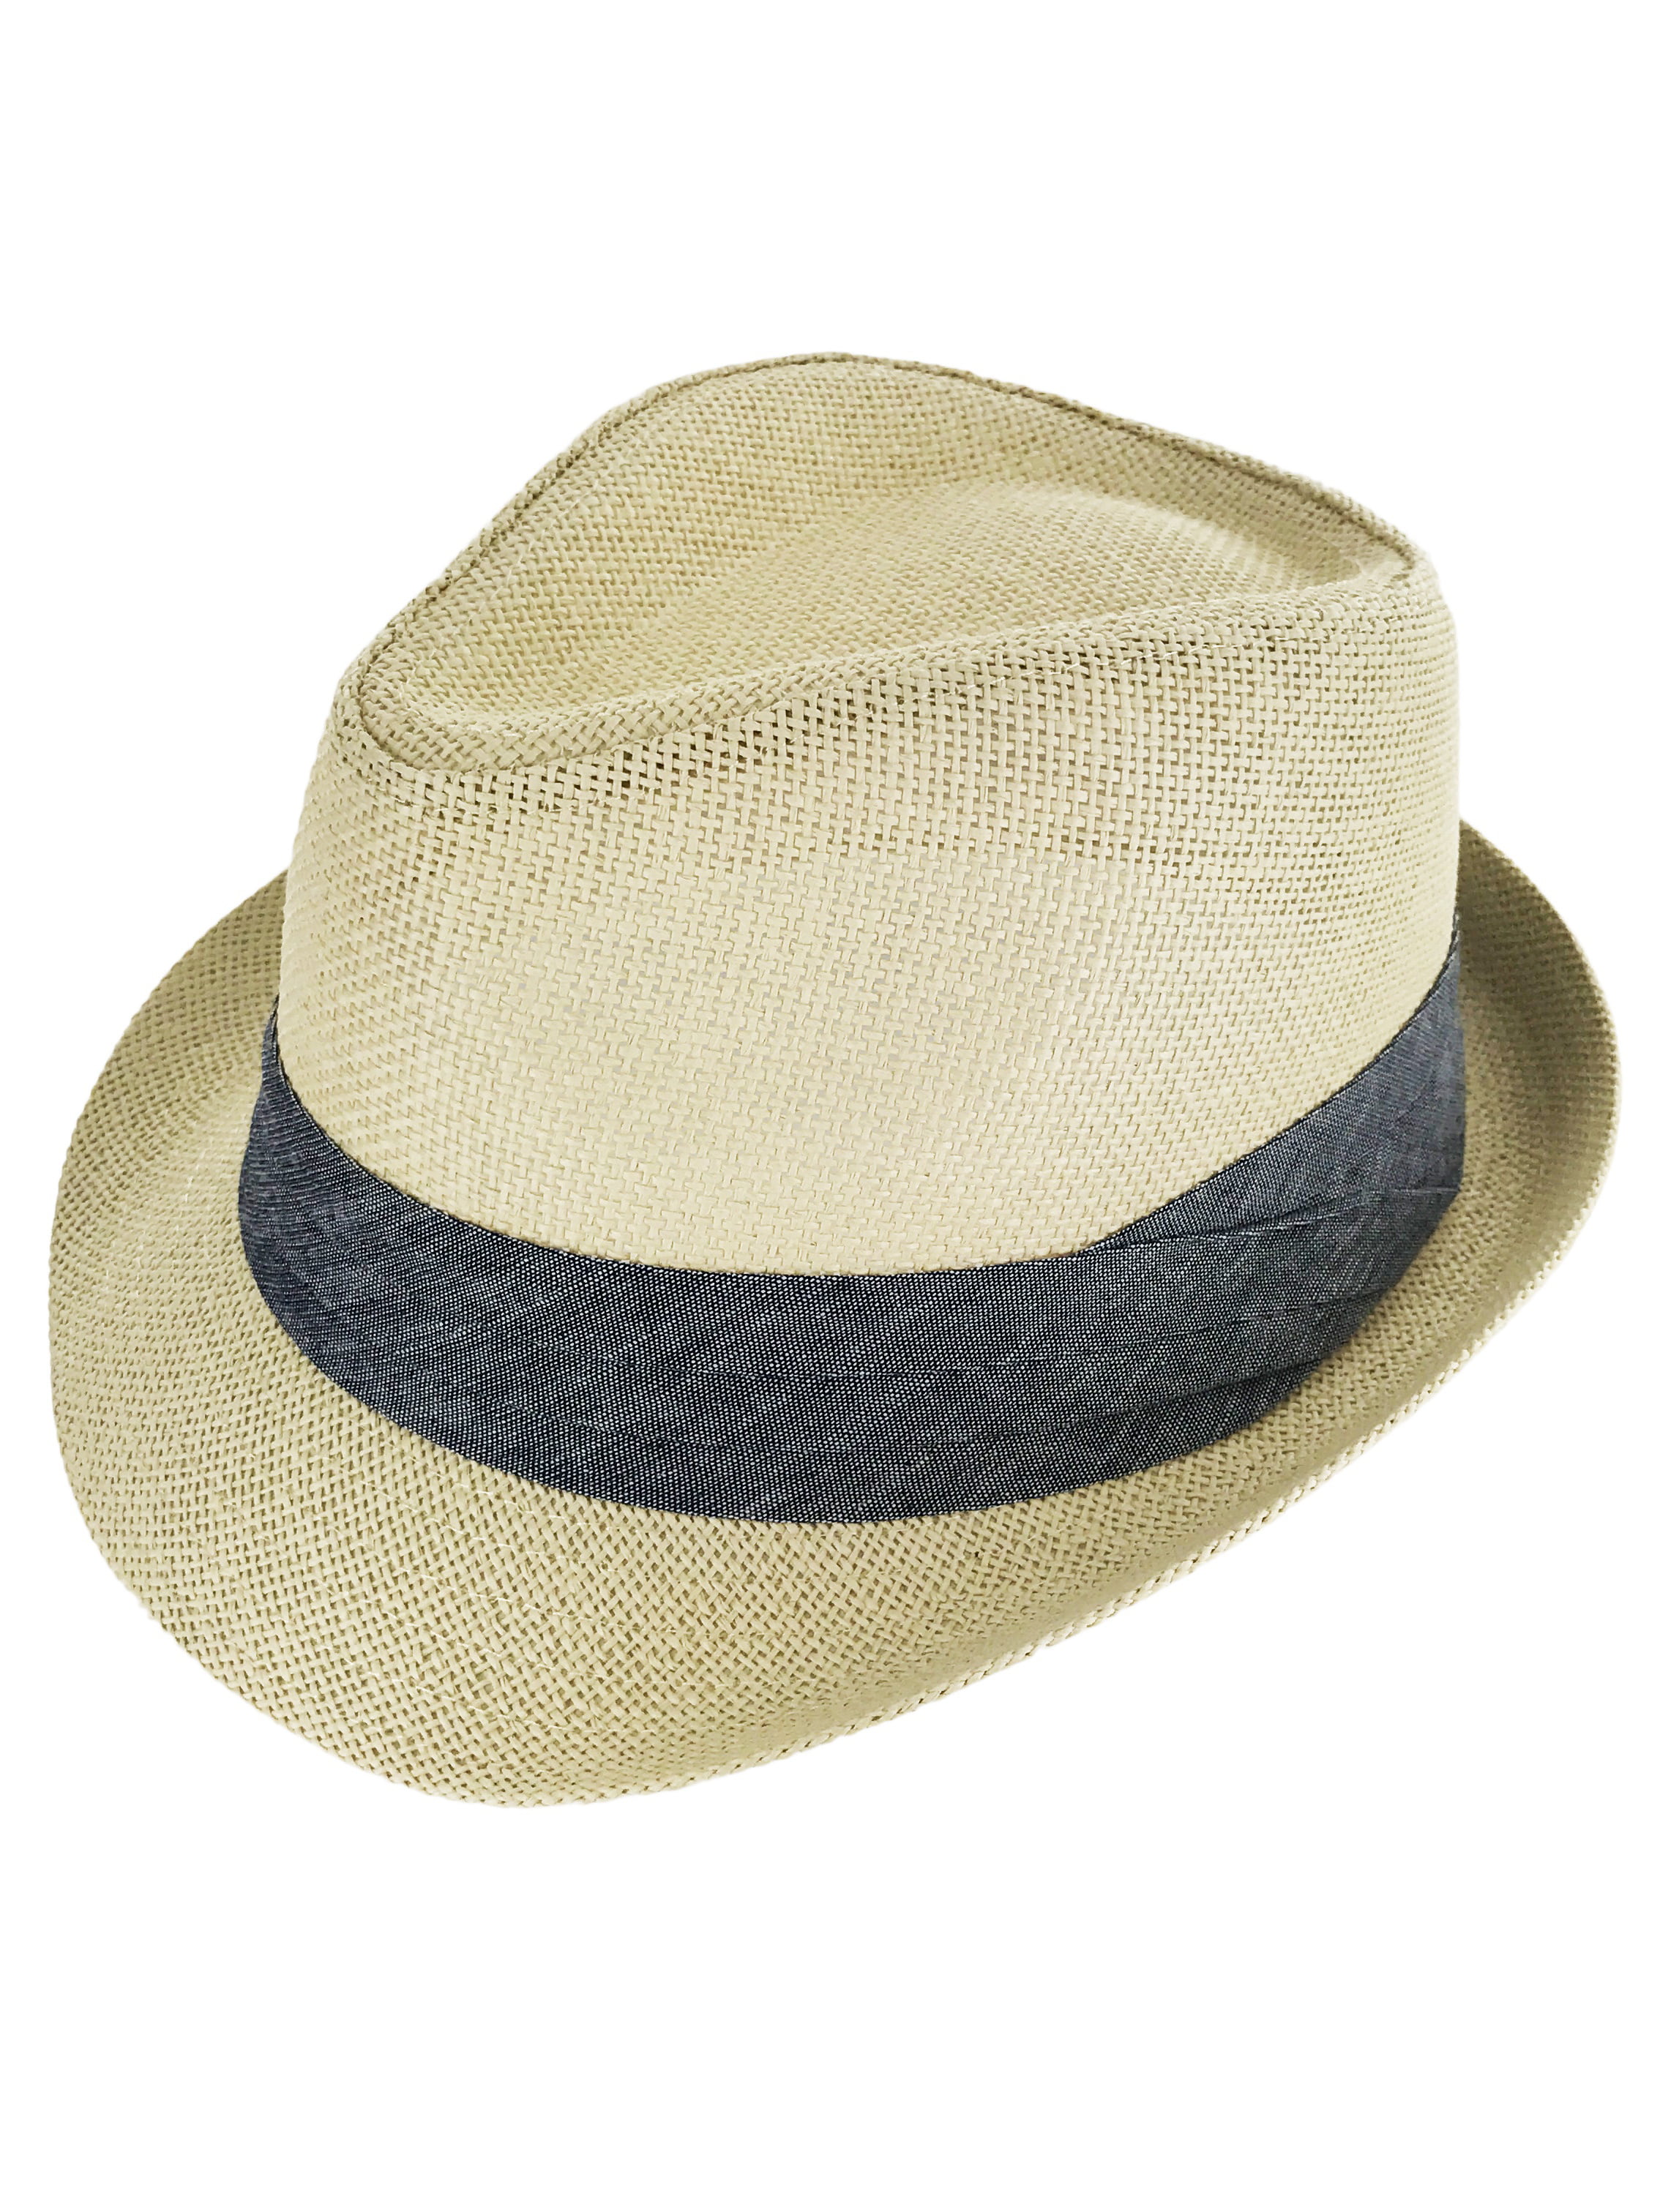 Faddism Fashion Fedora Hat in Navy Beige 